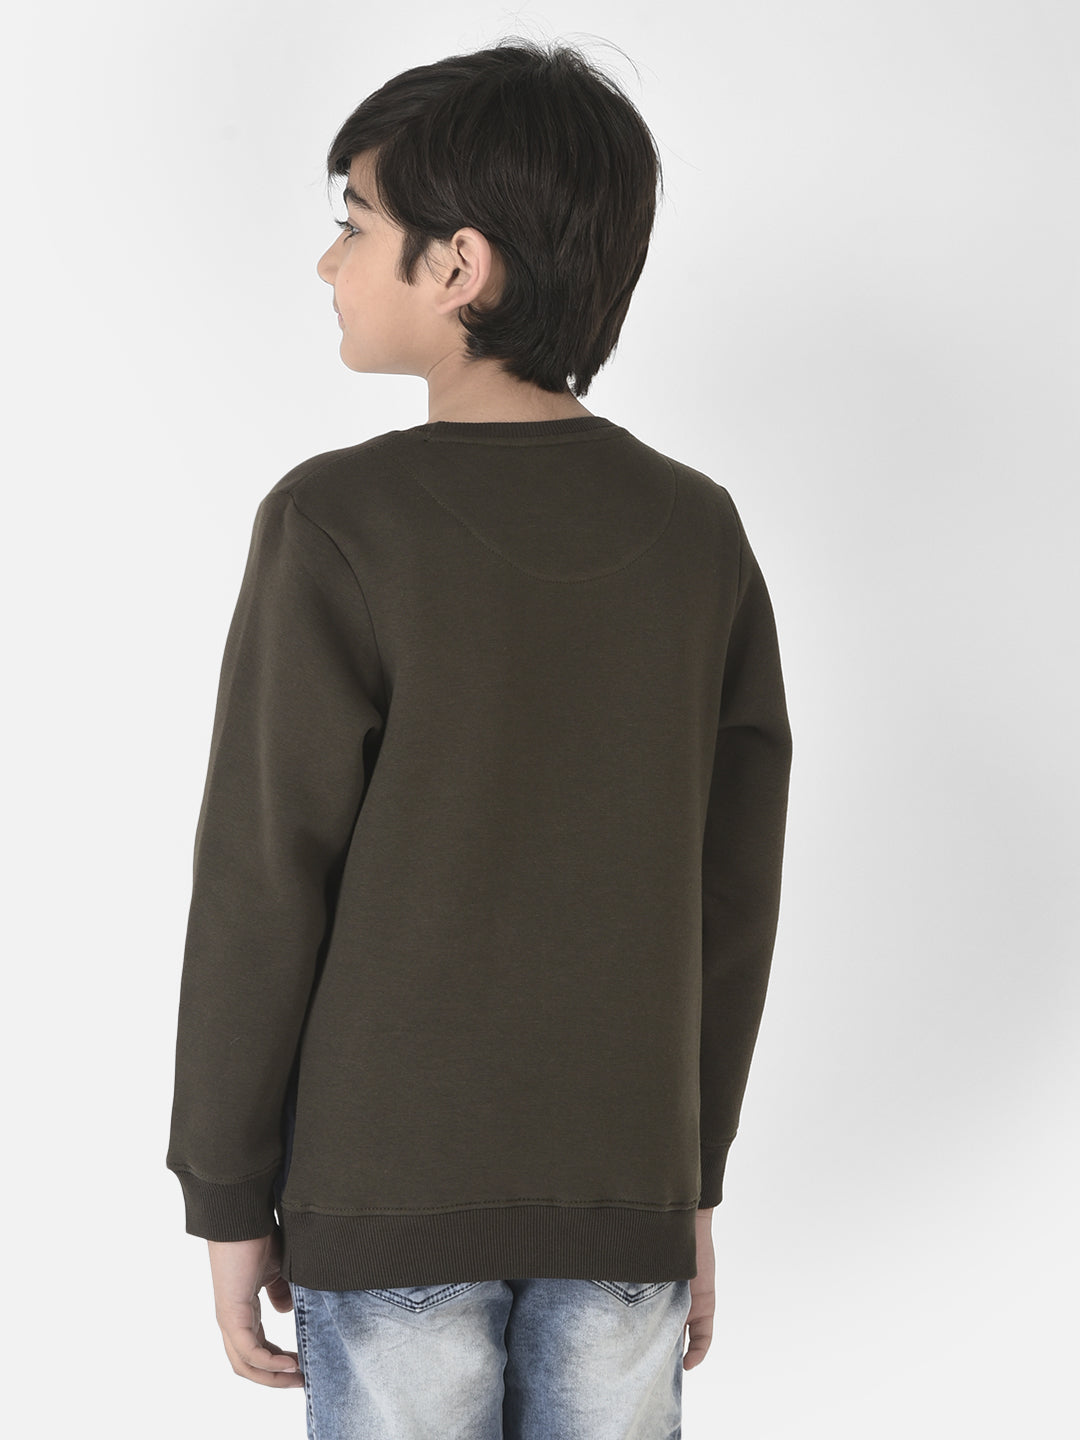  Olive Green Upside-Down Sweatshirt